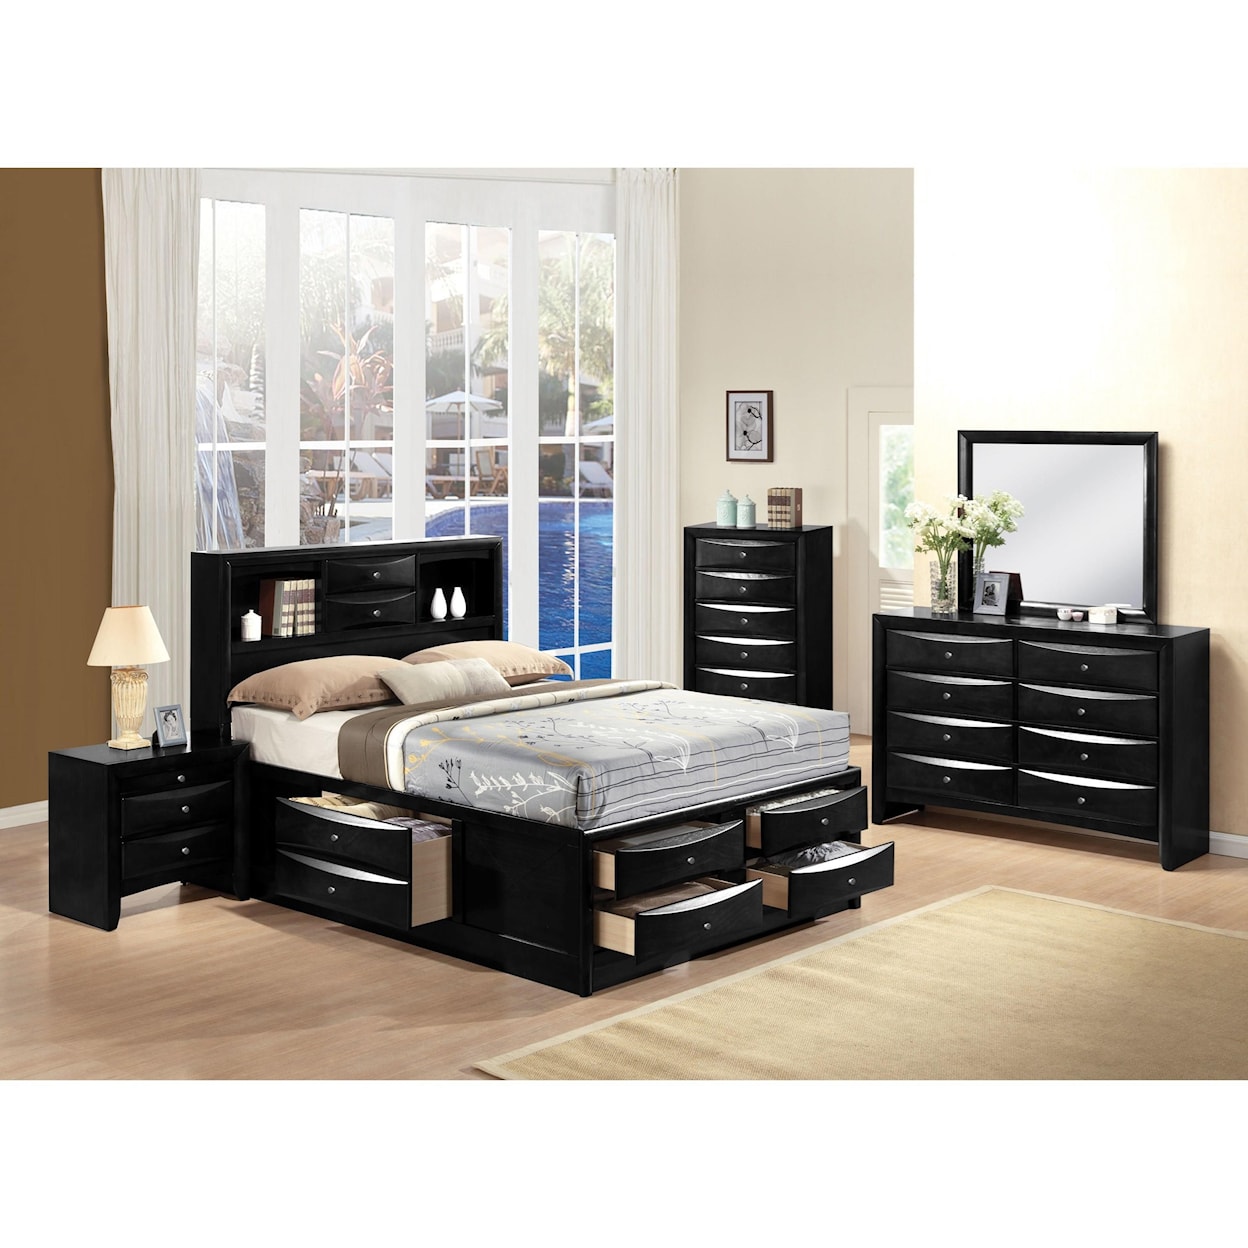 Acme Furniture Ireland Storage - Black Eastern King Bed w/Storage